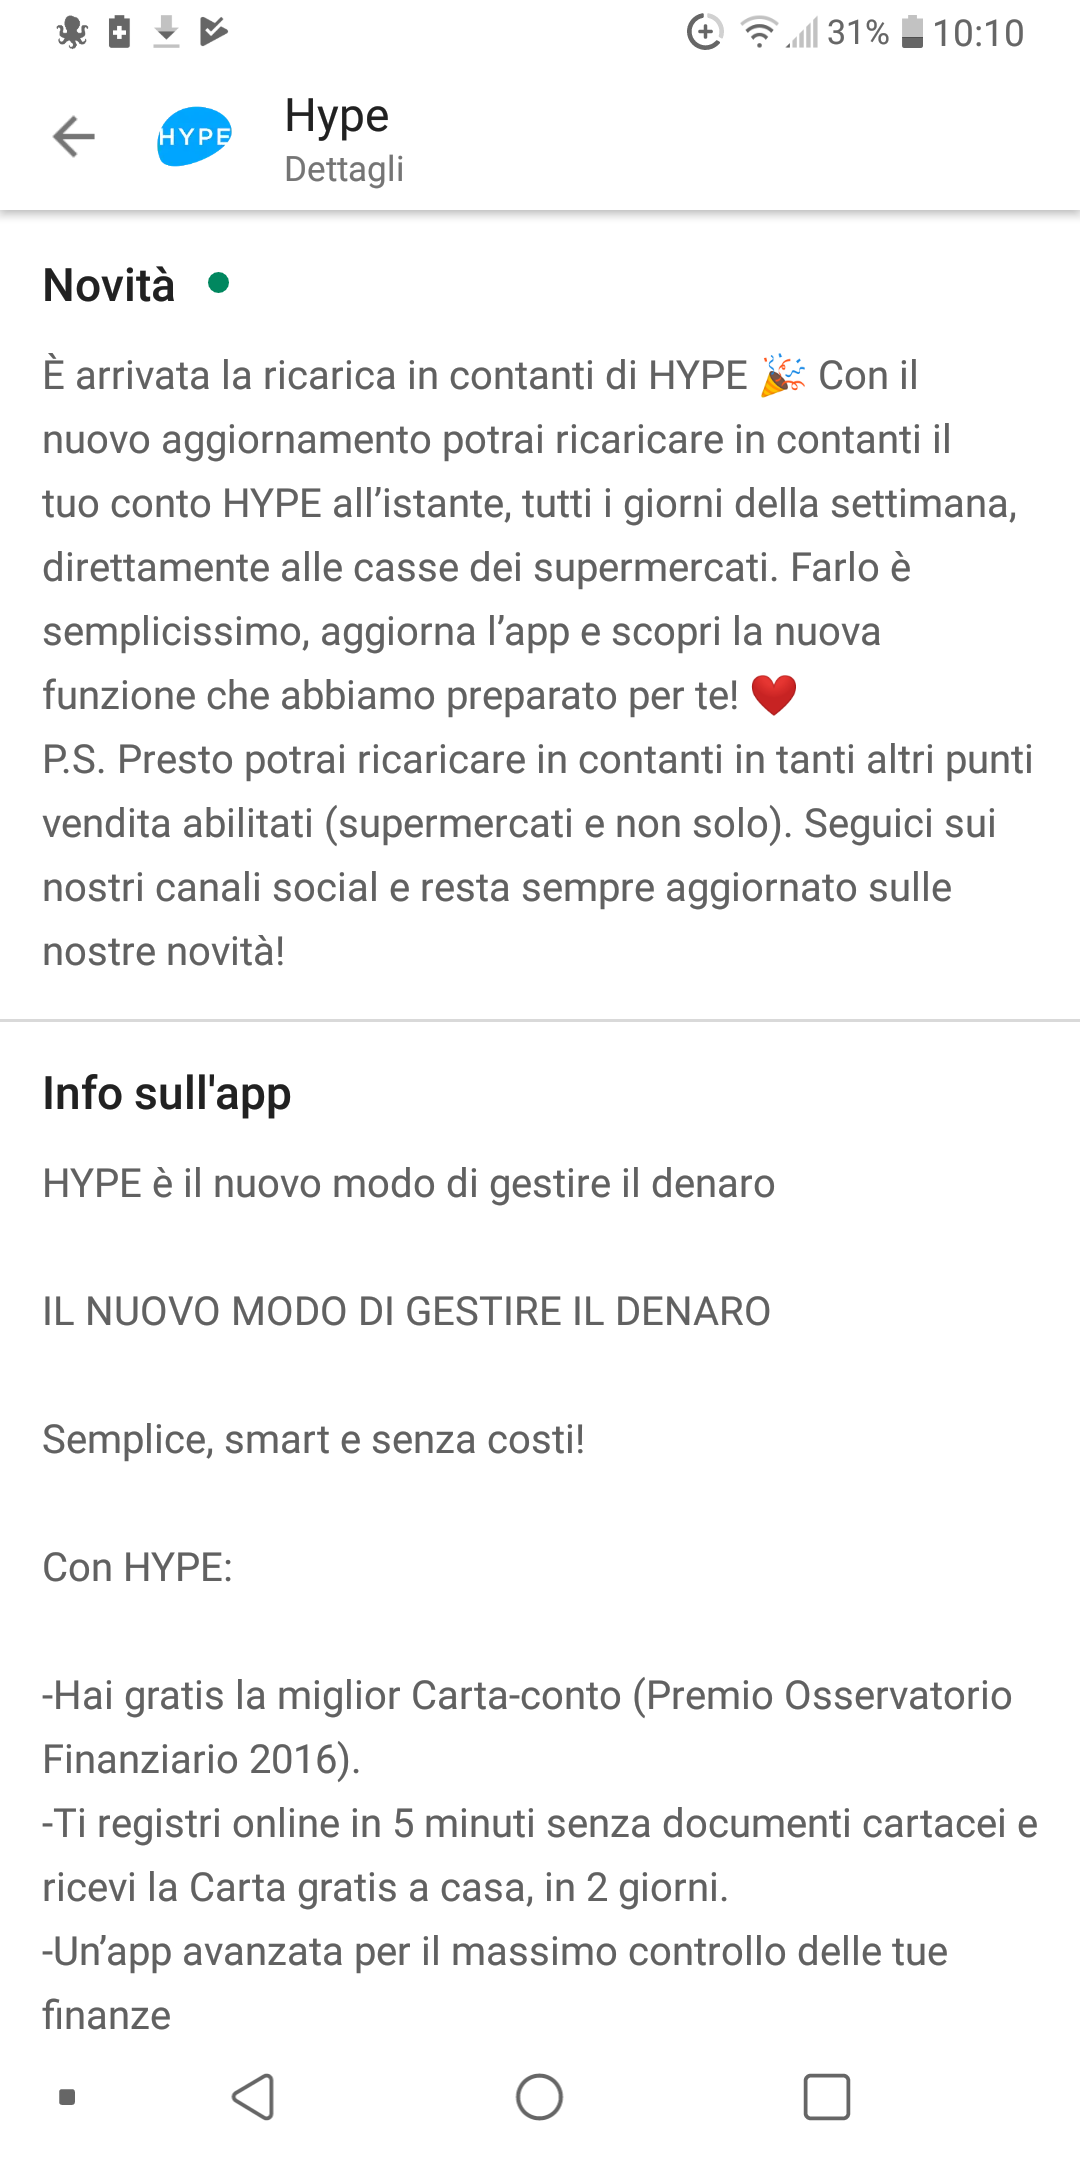 1-Hype-Pagamento-Casse-Supermercati.png